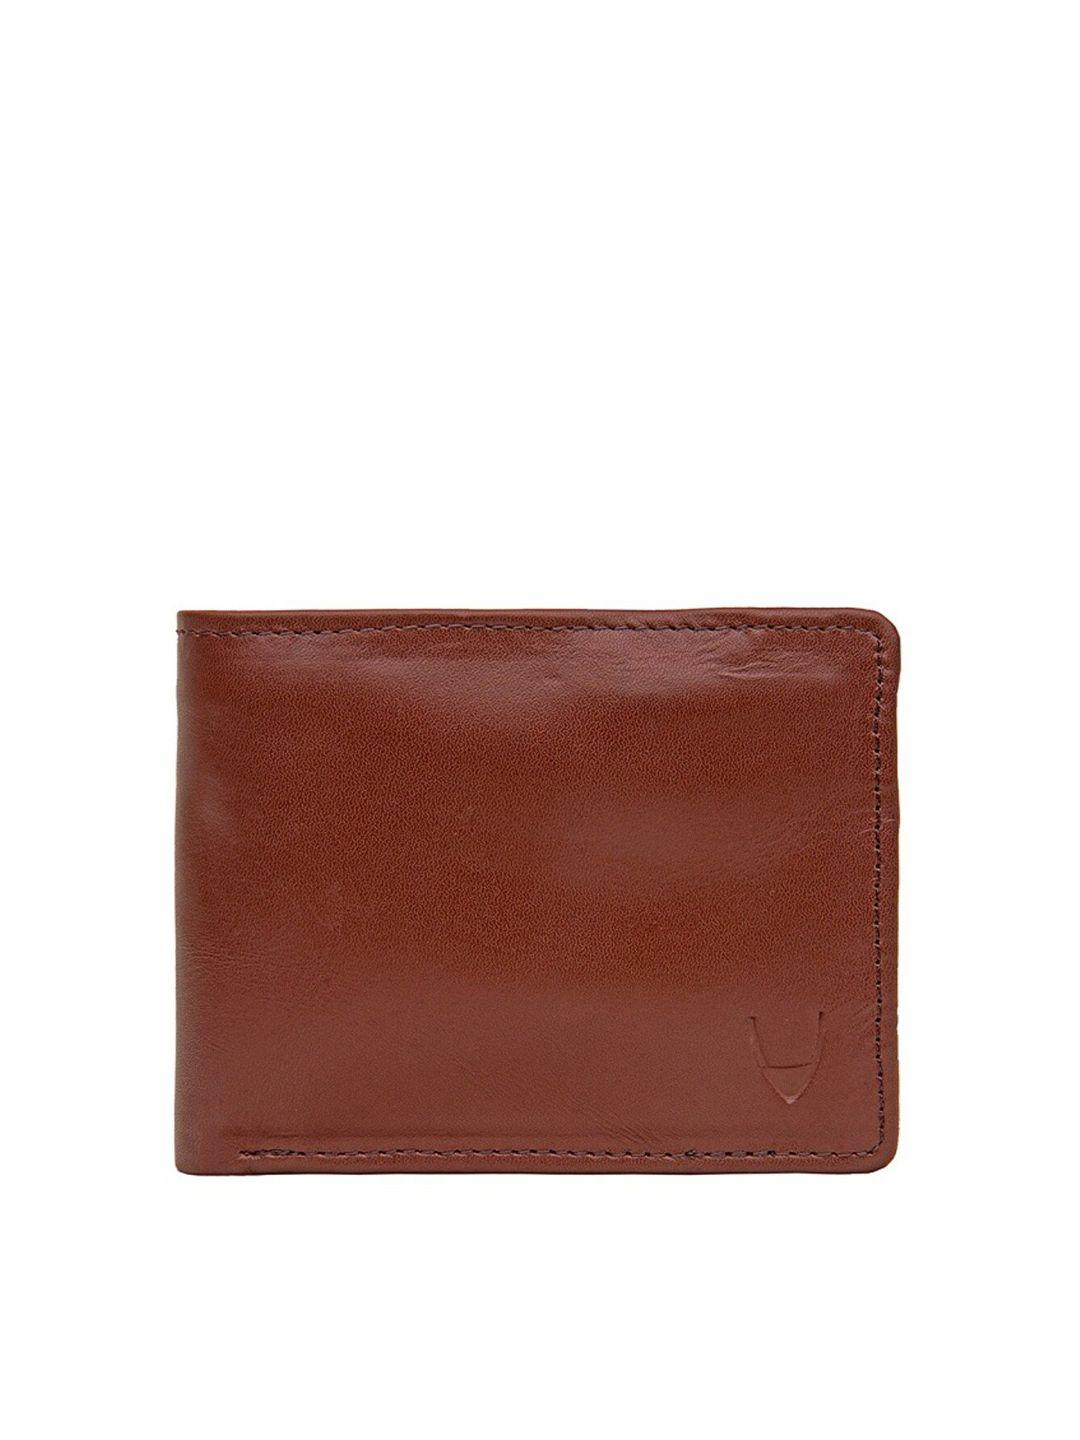 hidesign men tan solid two fold wallet